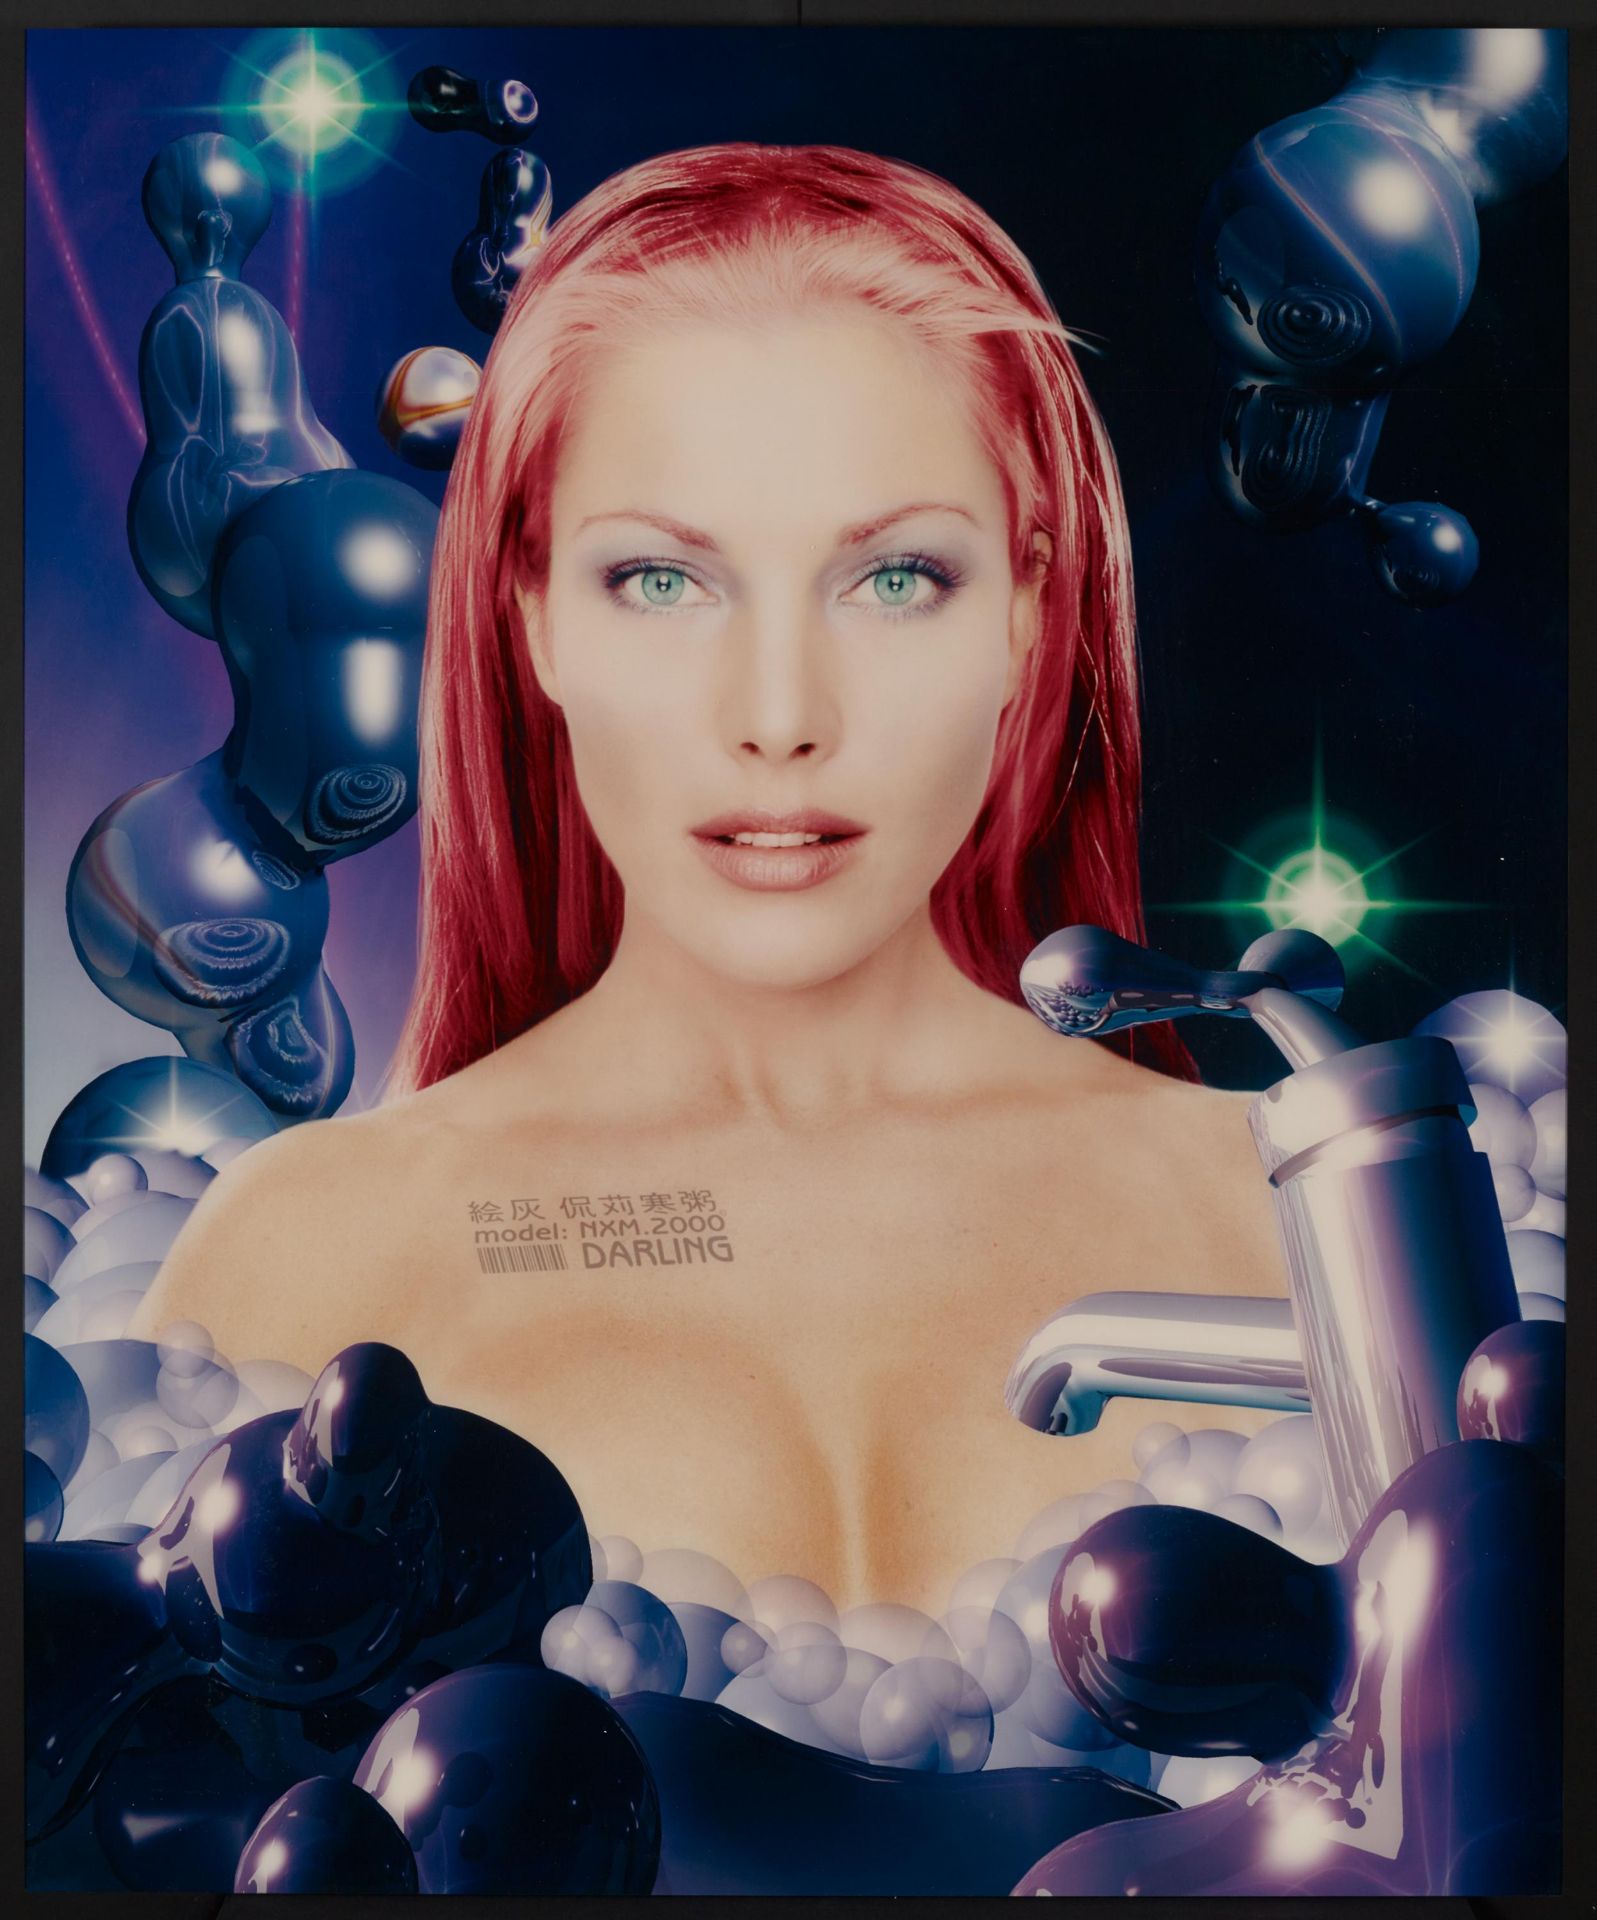 Micha Klein: Darling (Model NXM 2000) - Image 2 of 3